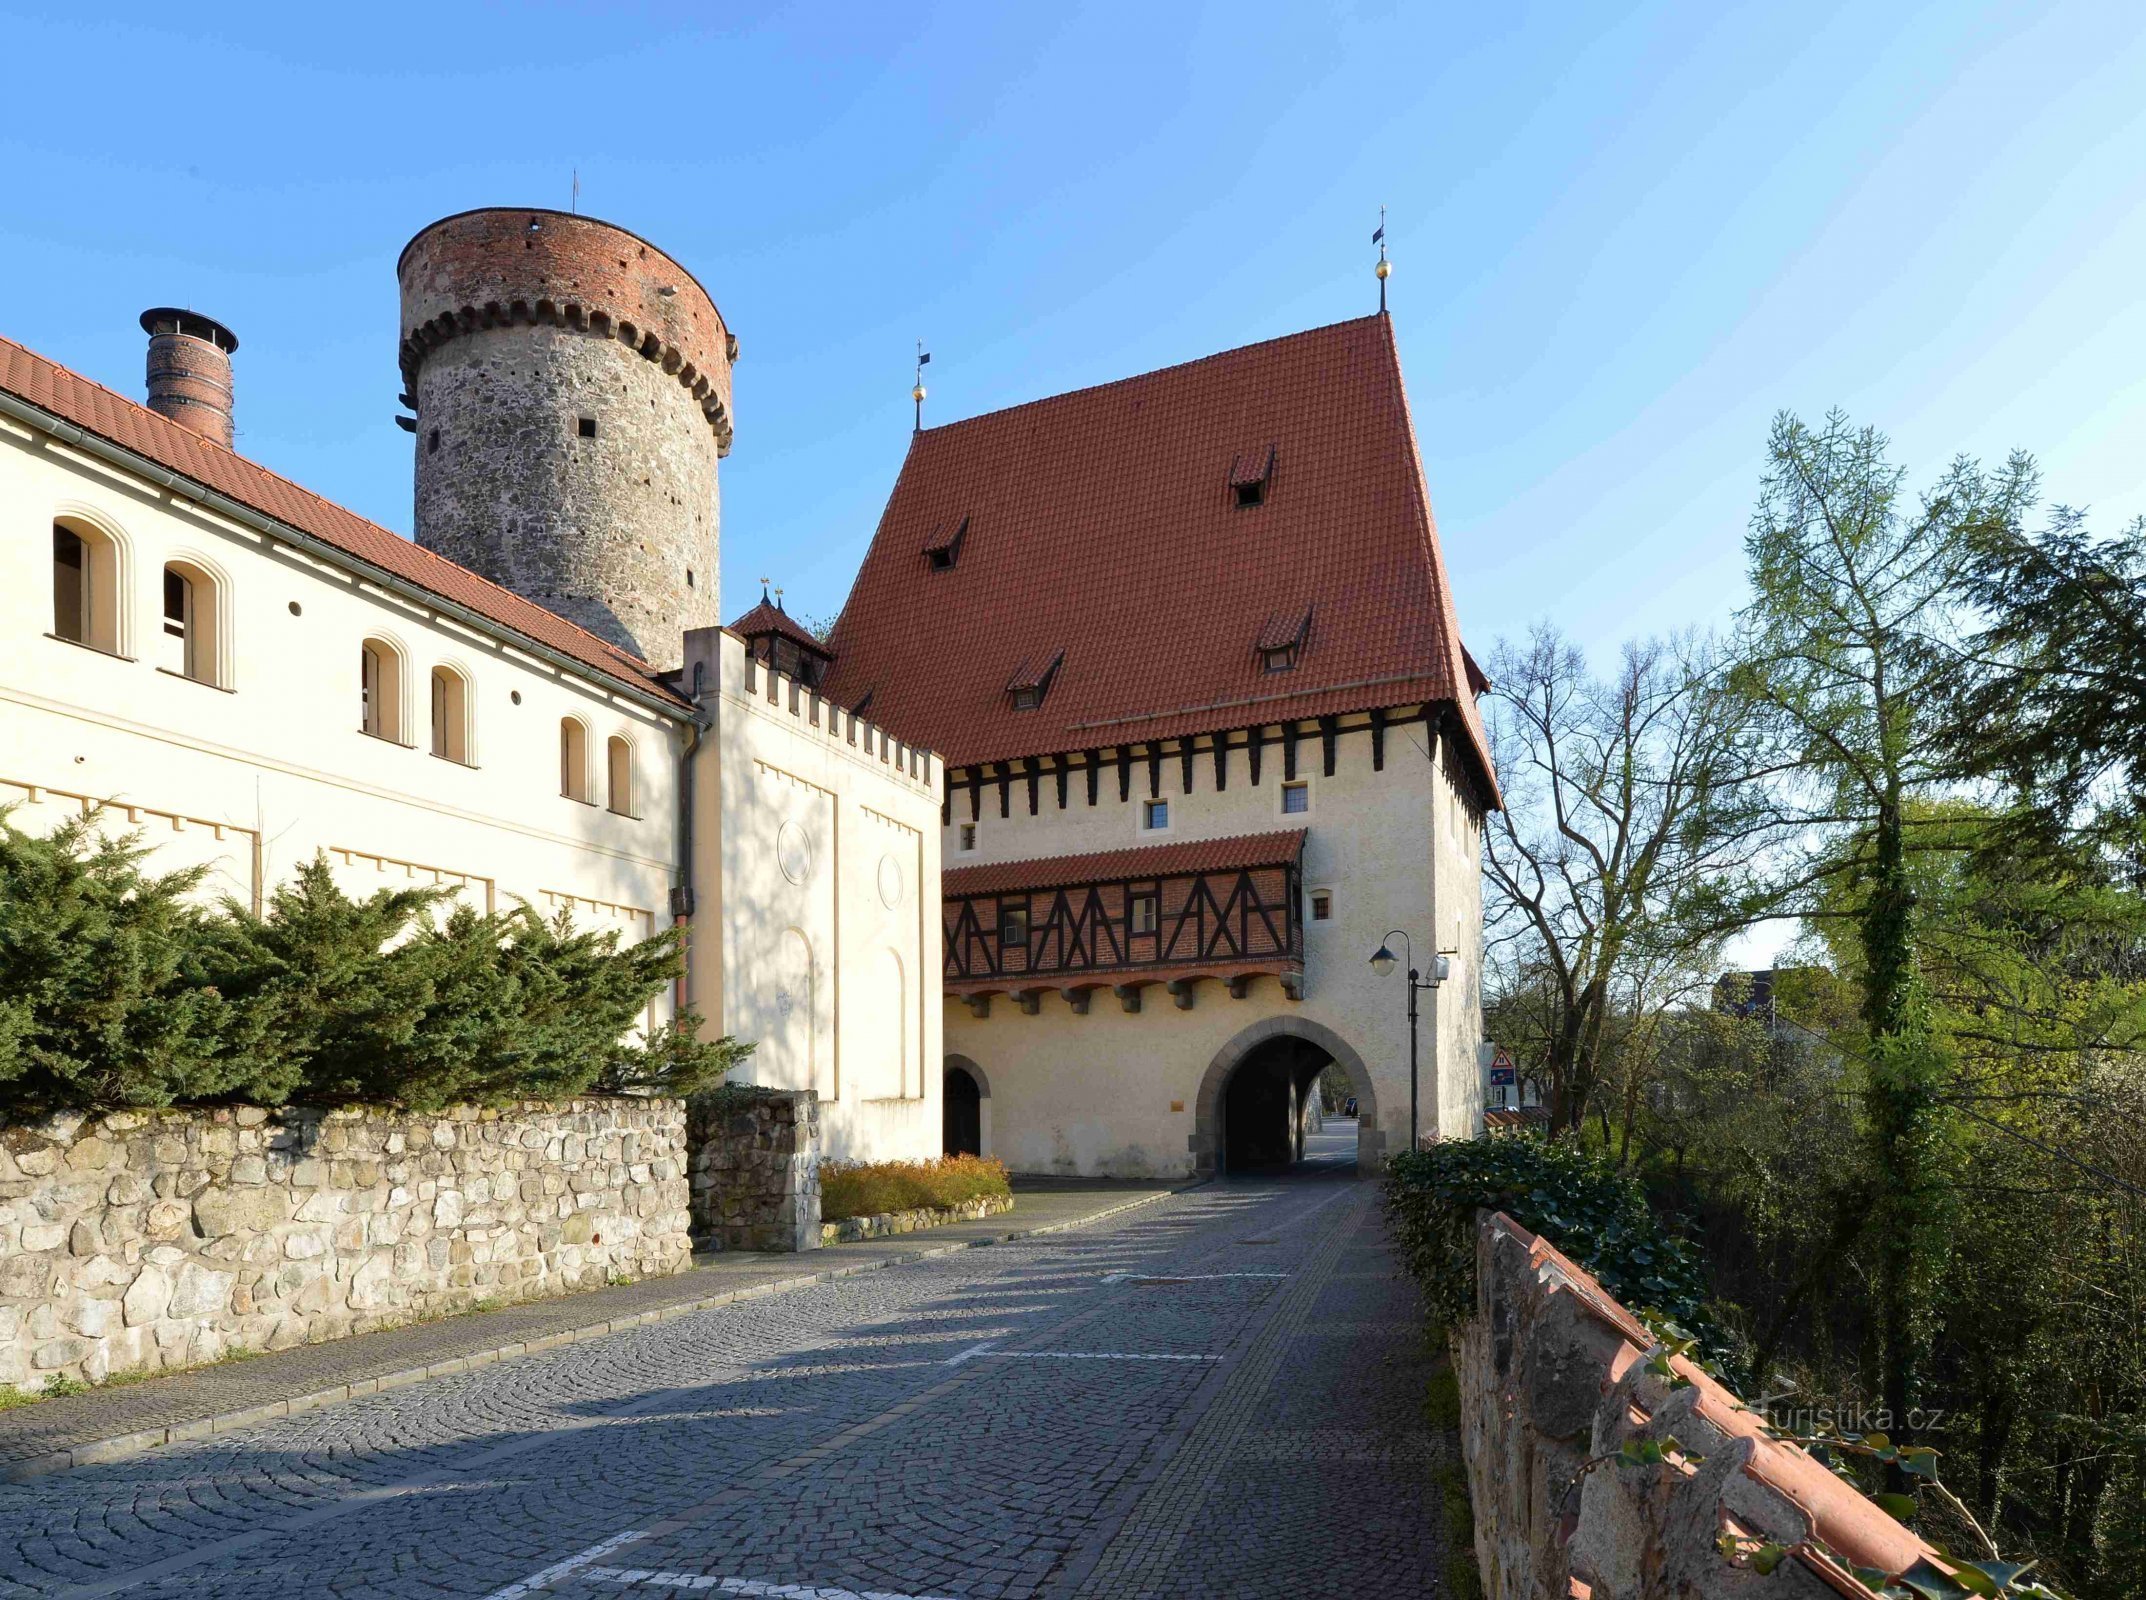 Kotnov Tower and Bechyňská Gate - one of the oldest monuments in Tábor